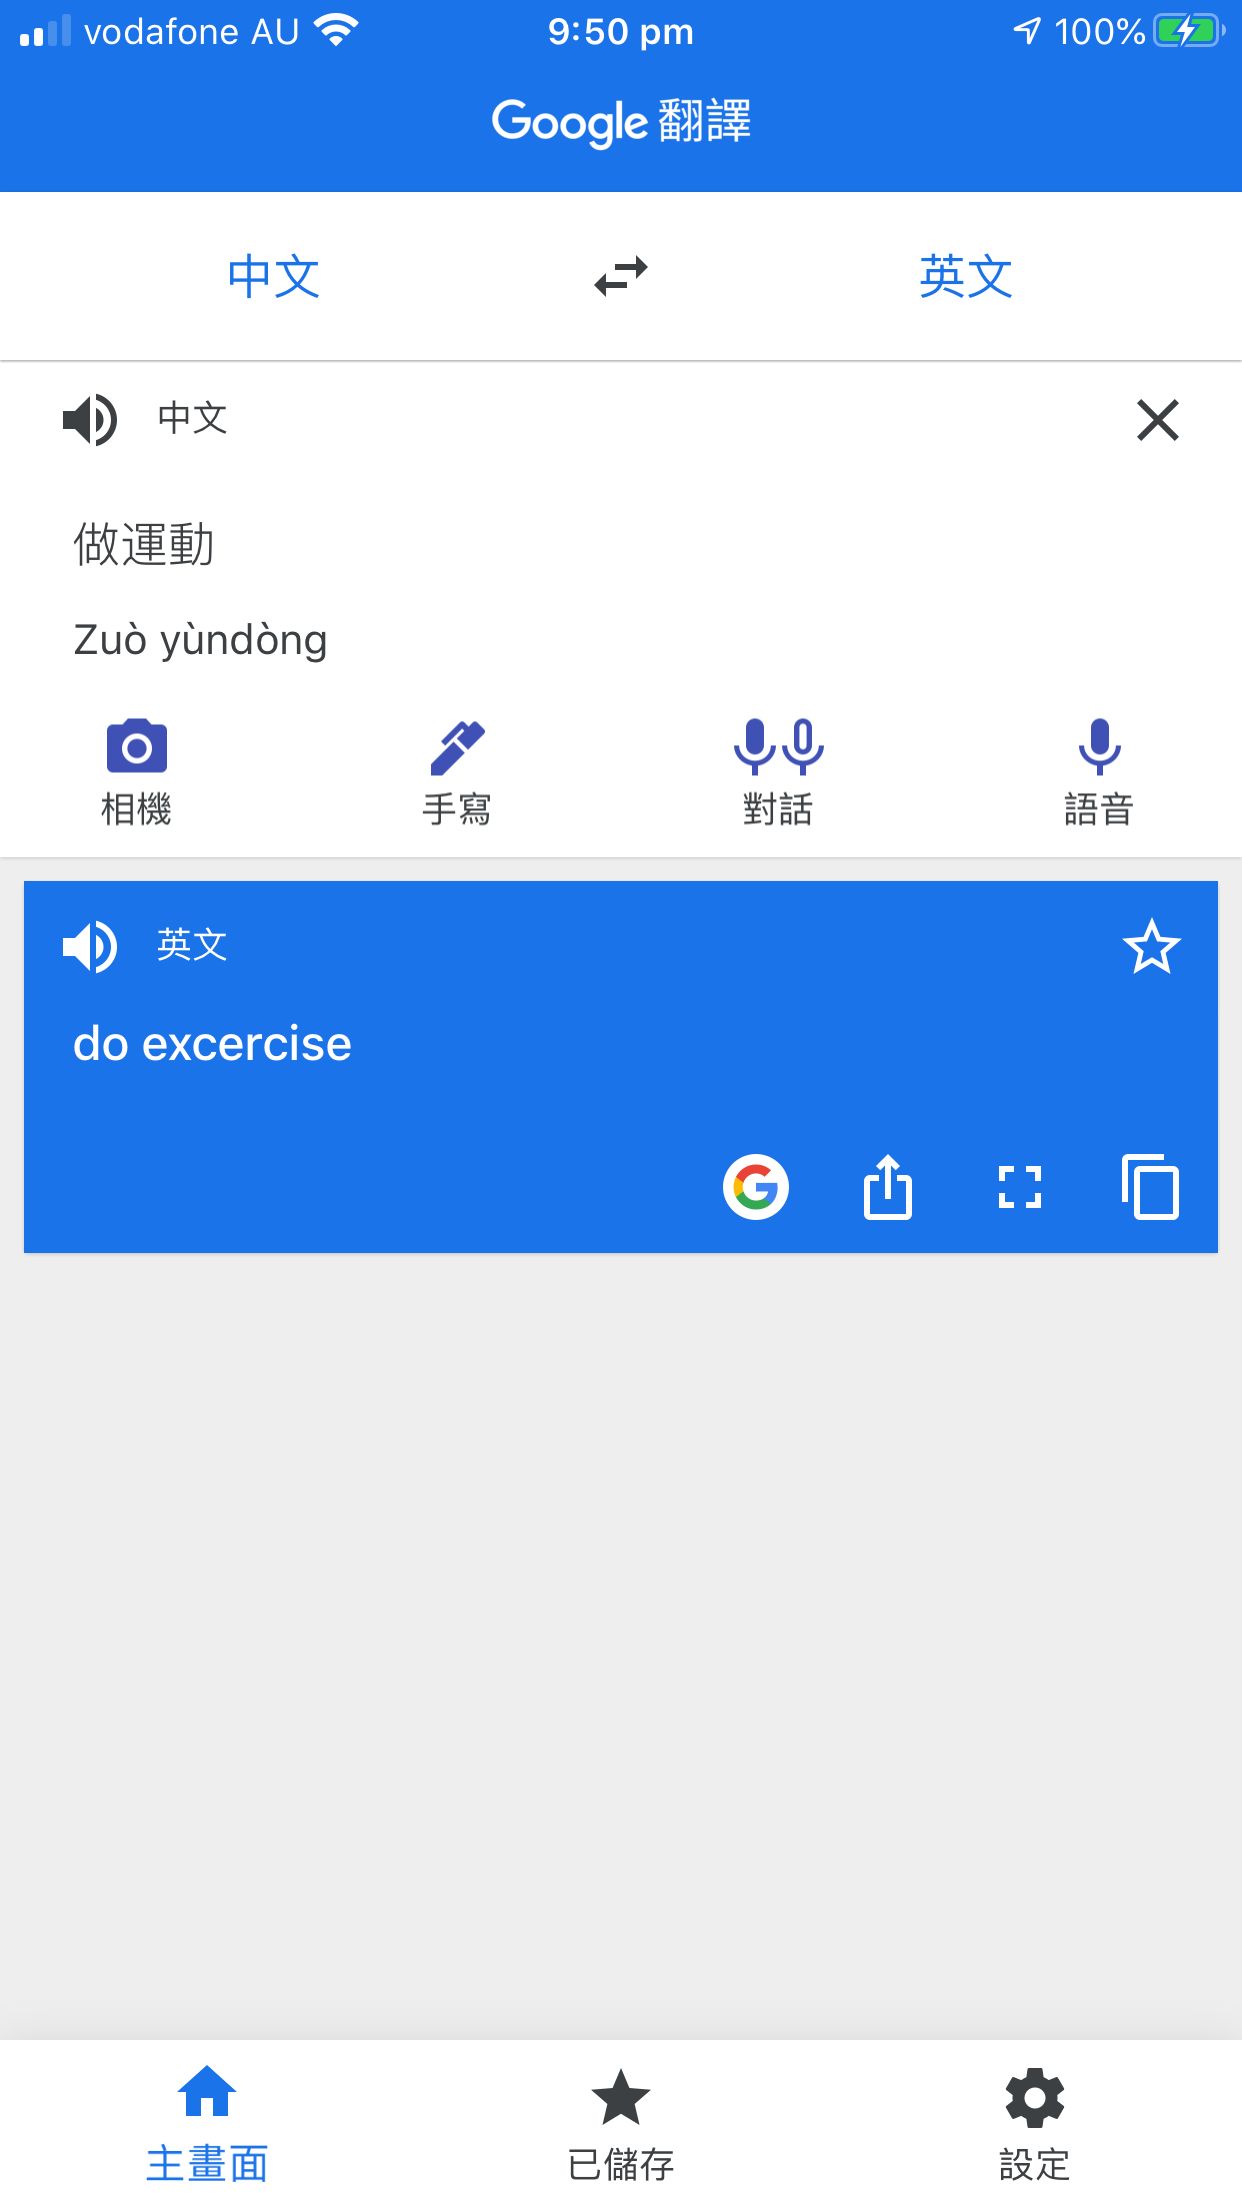 english to chinese translation google translate